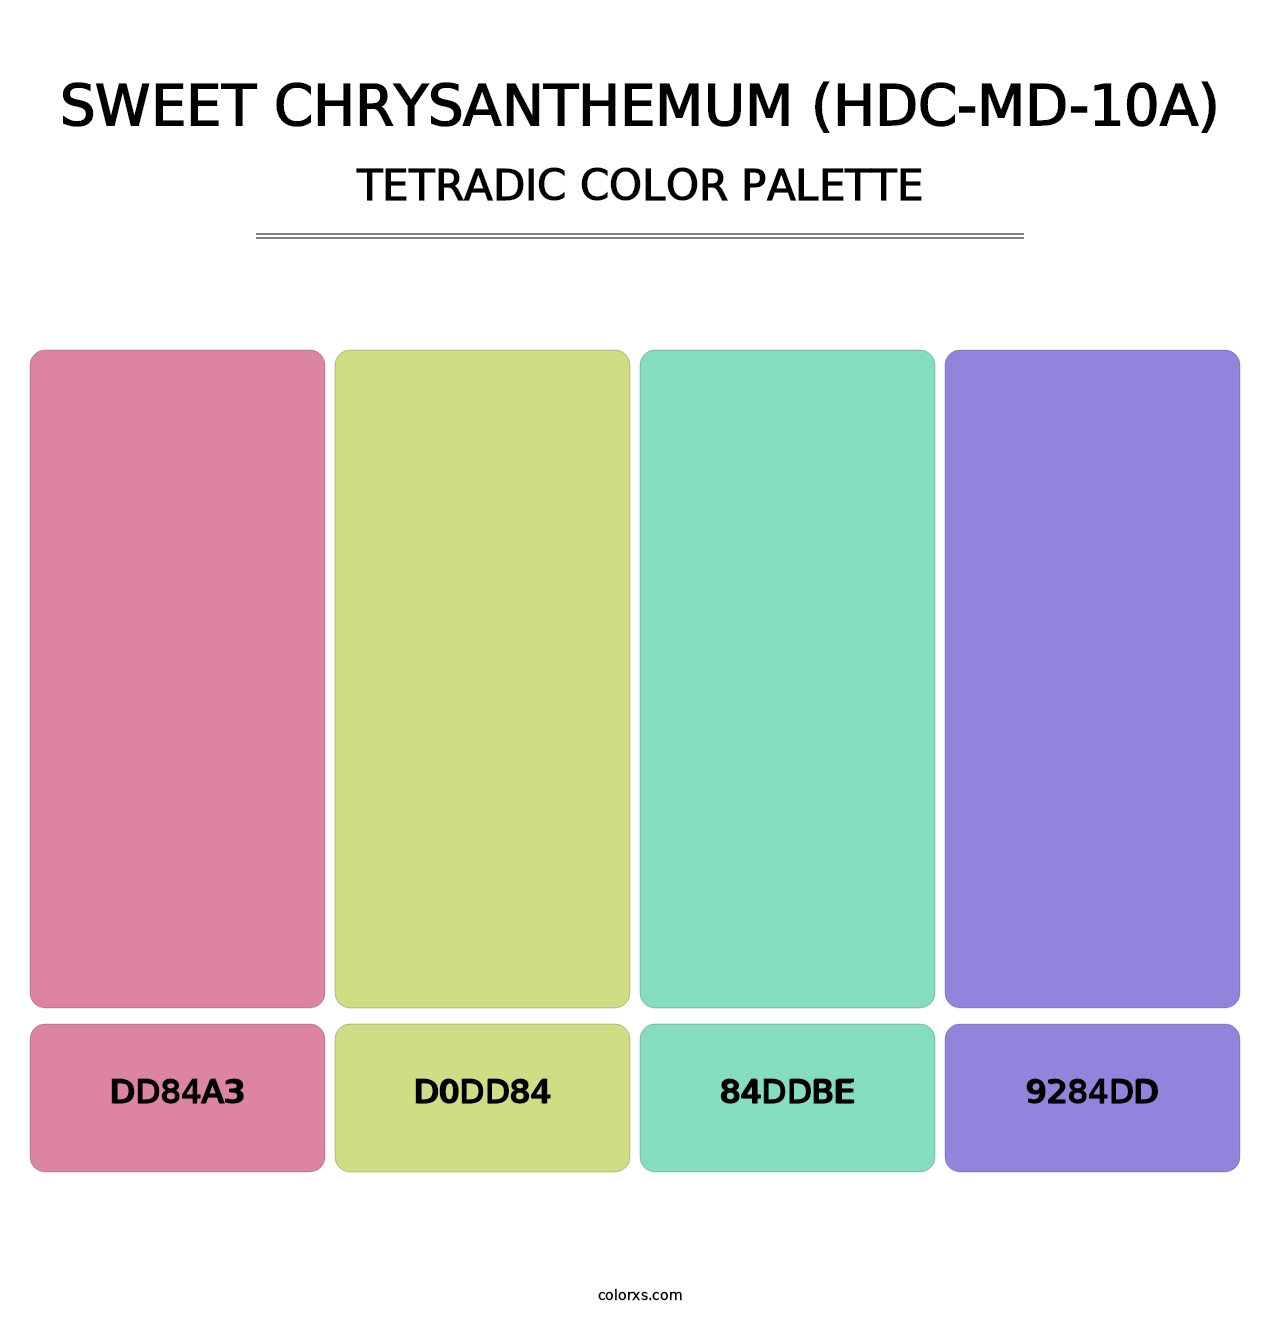 Sweet Chrysanthemum (HDC-MD-10A) - Tetradic Color Palette